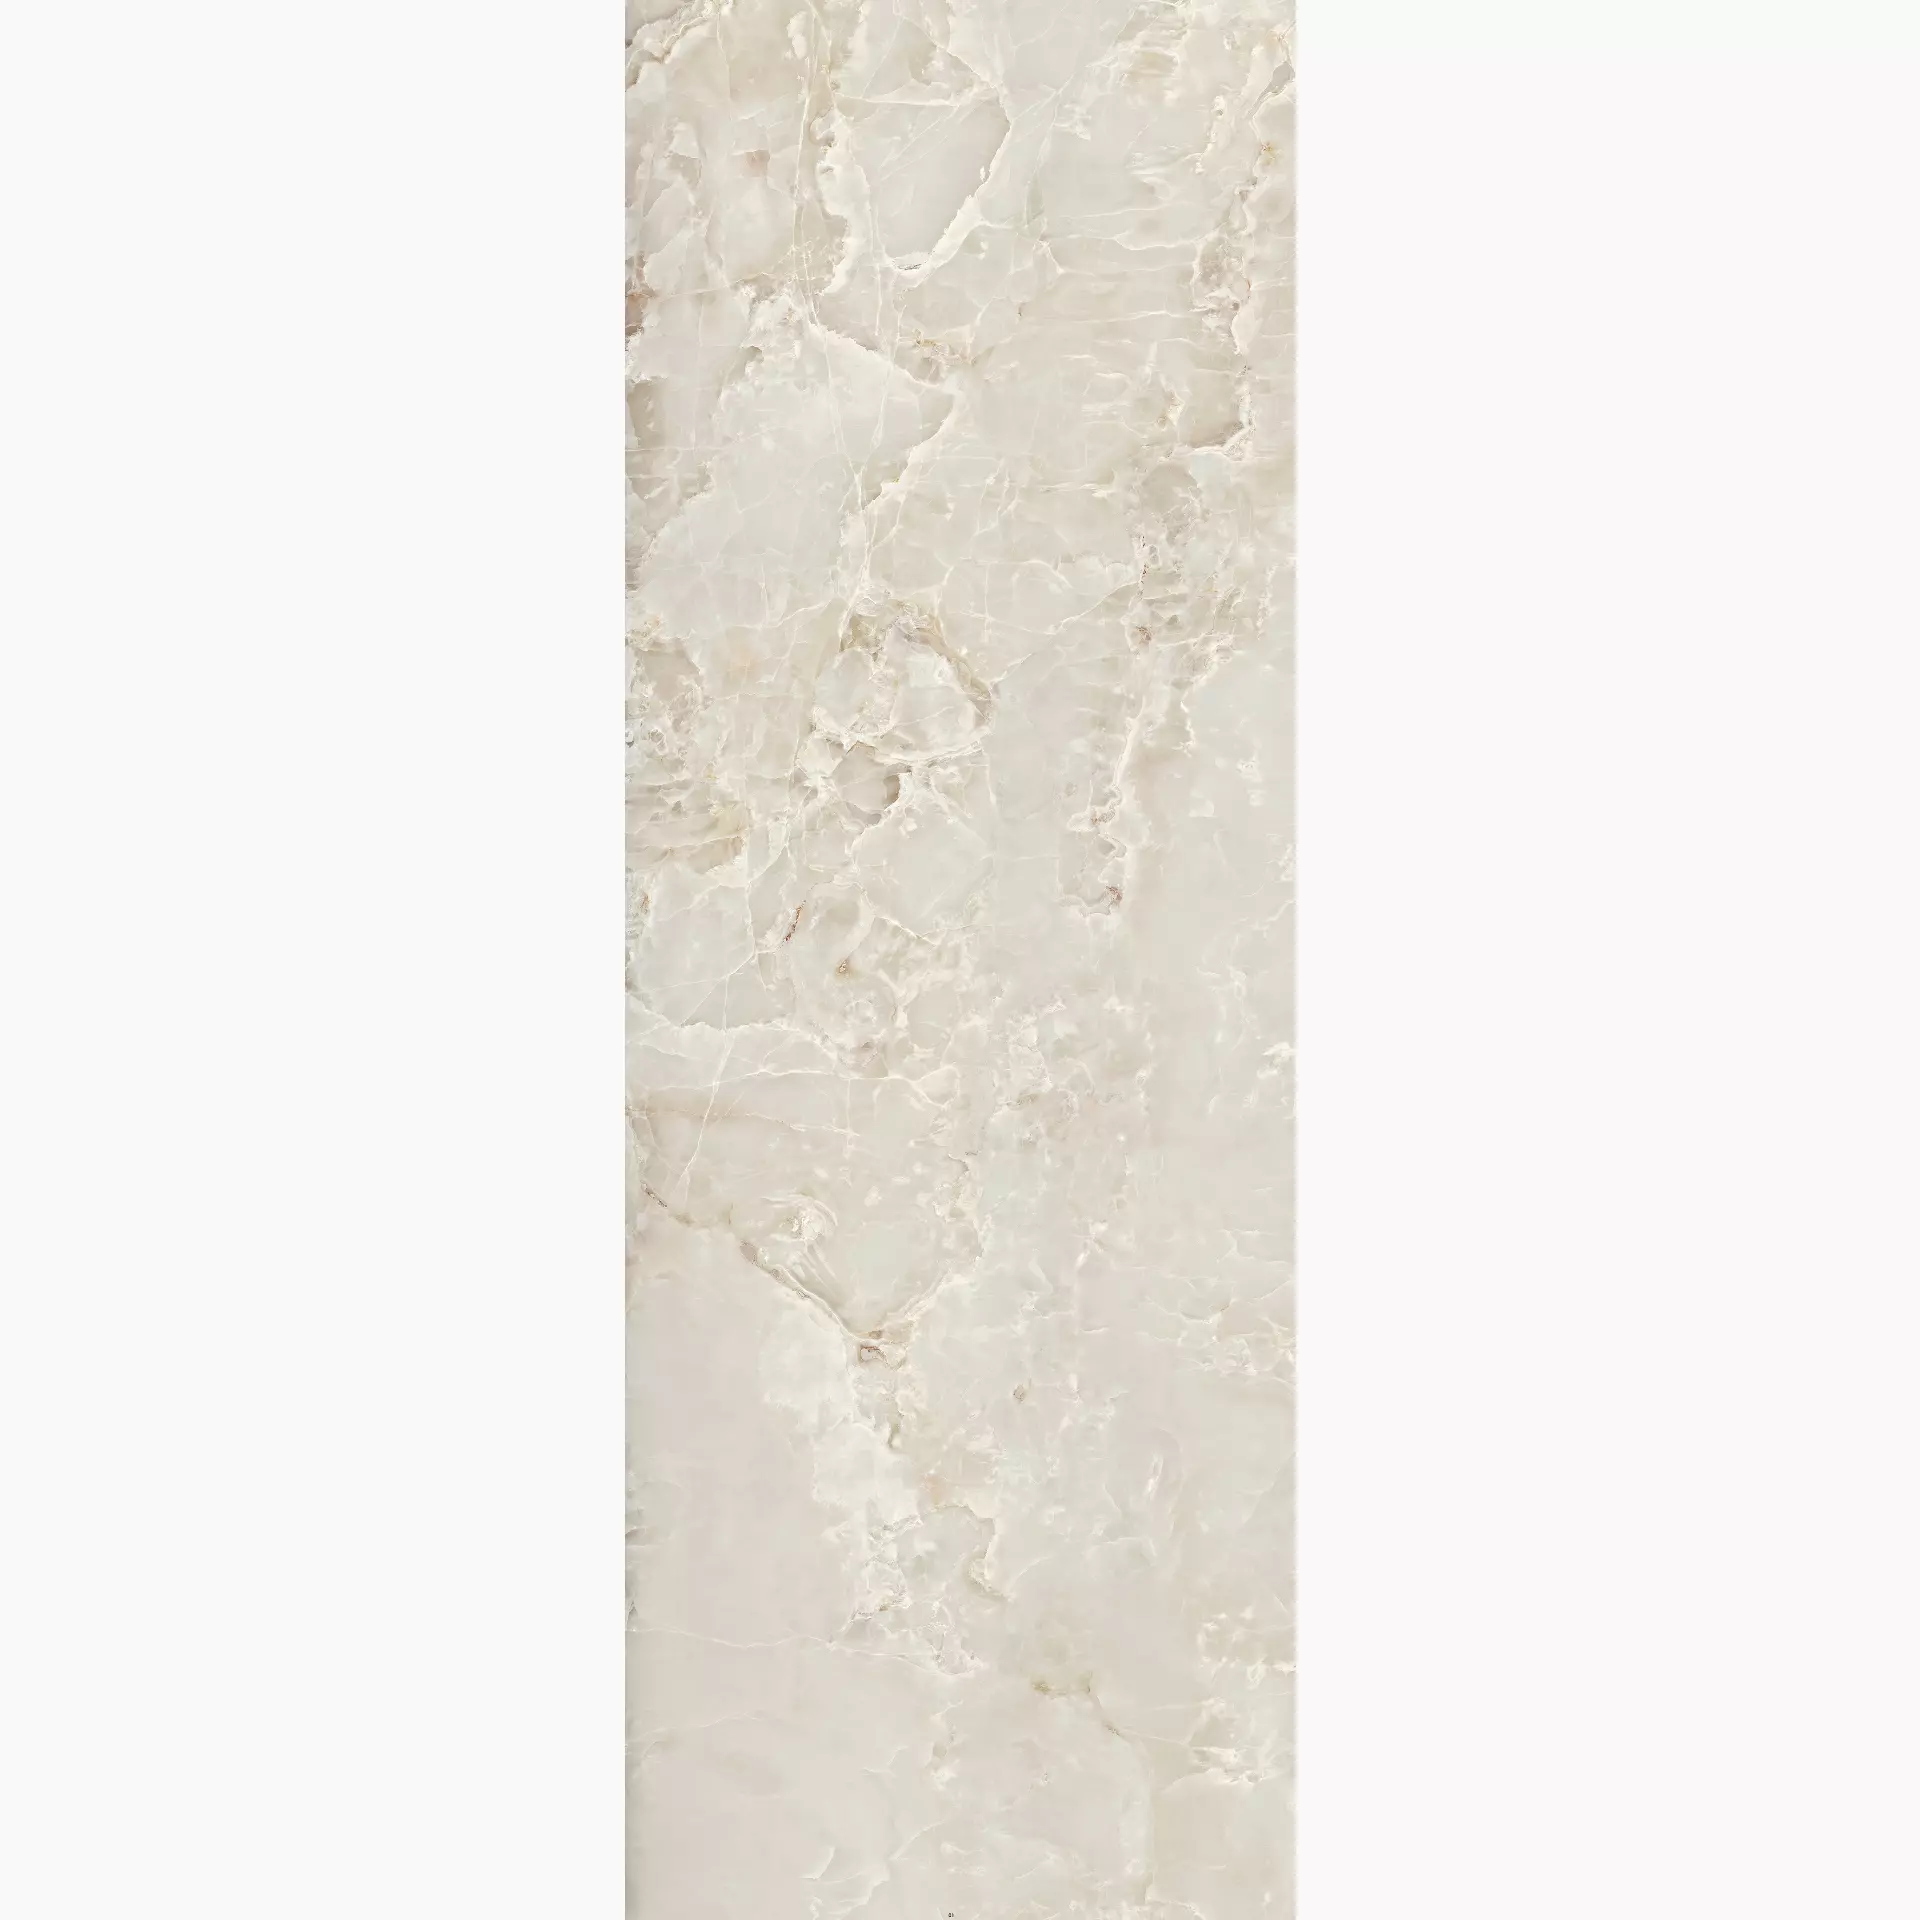 Cottodeste Kerlite Starlight Onyx Pearl Smooth Protect EK7SL70 100x300cm rectified 3,5mm